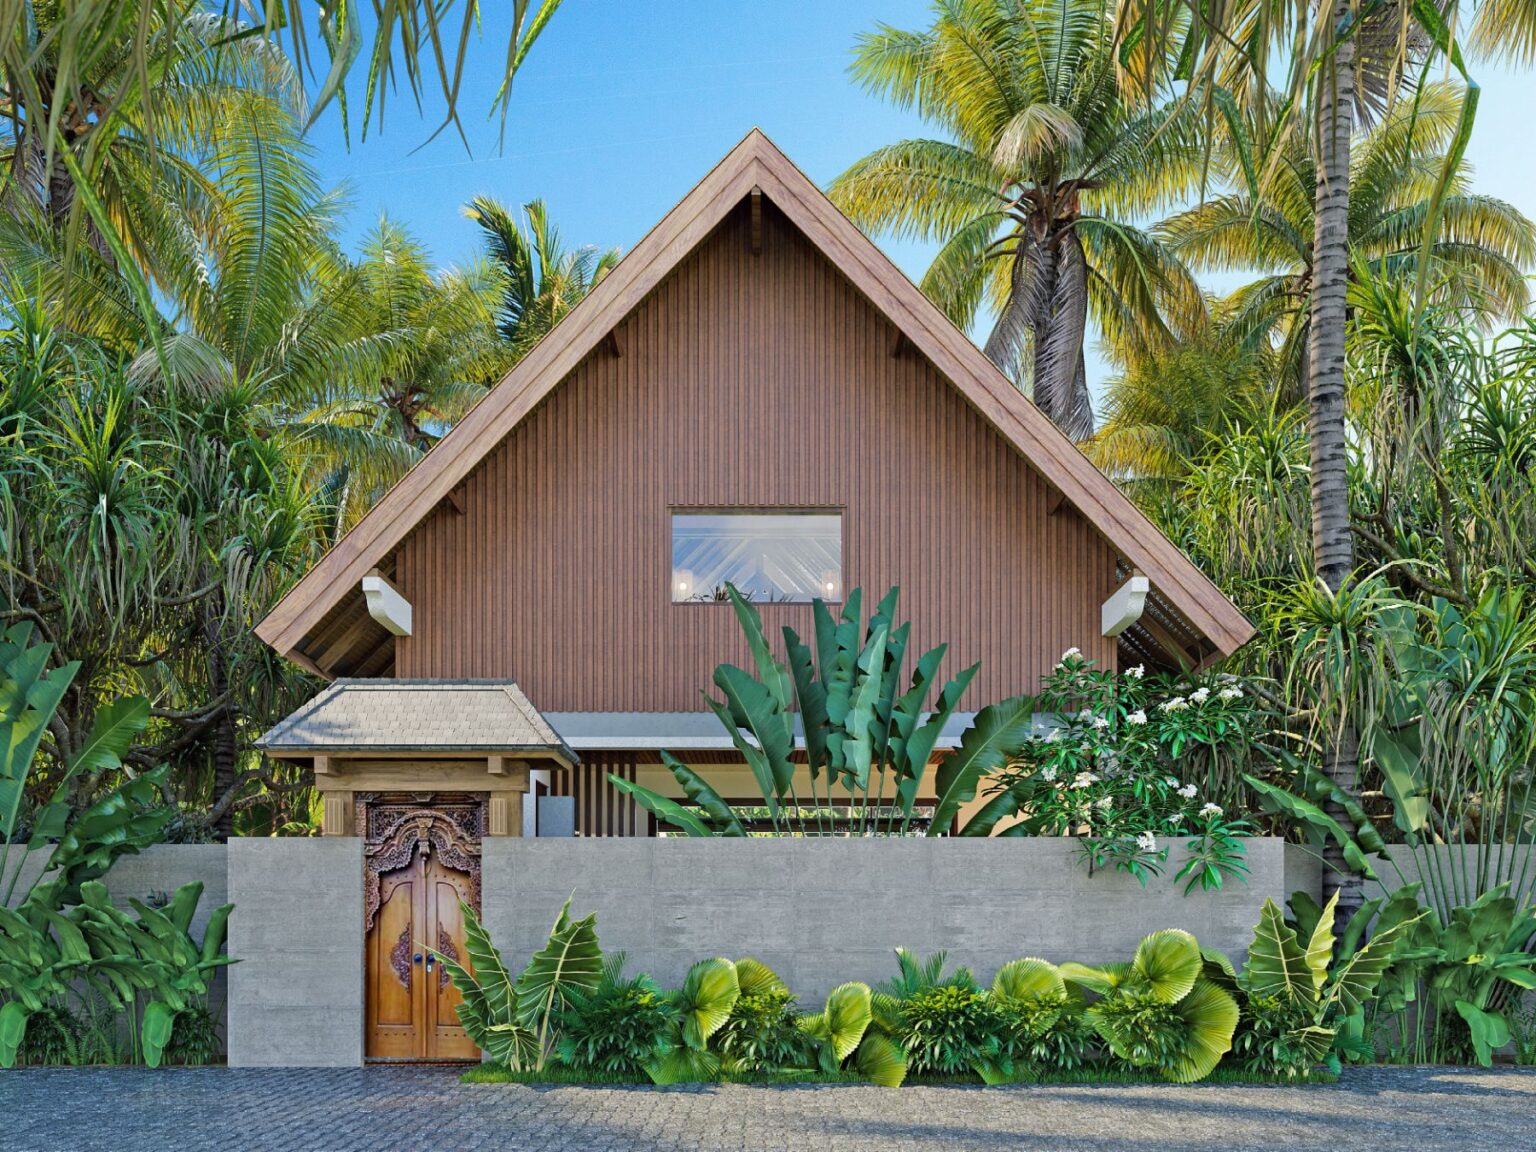 The Hut - Architecture Design by Balitecture